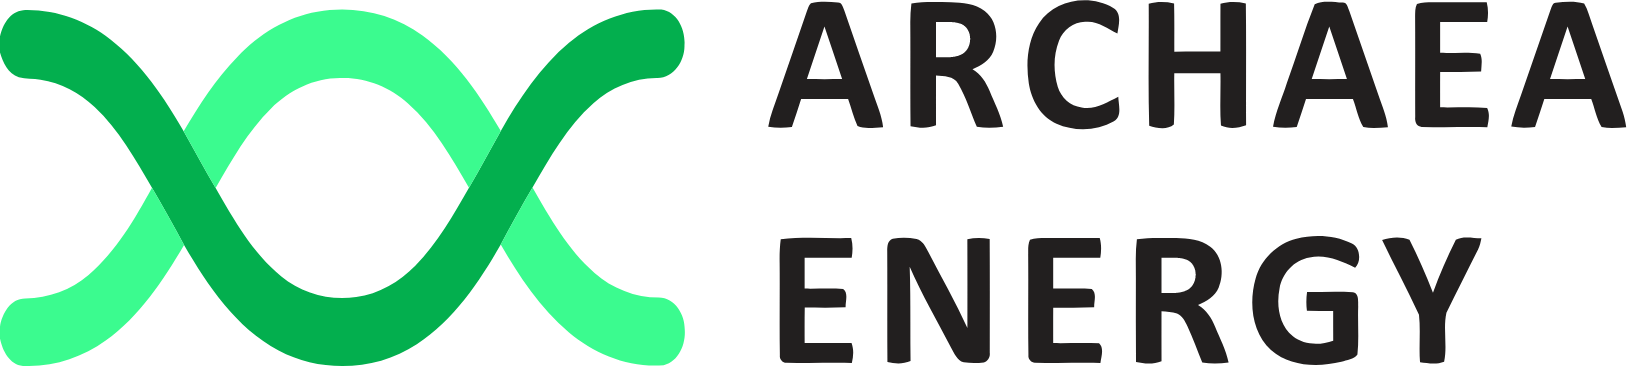 Archaea Energy logo large (transparent PNG)